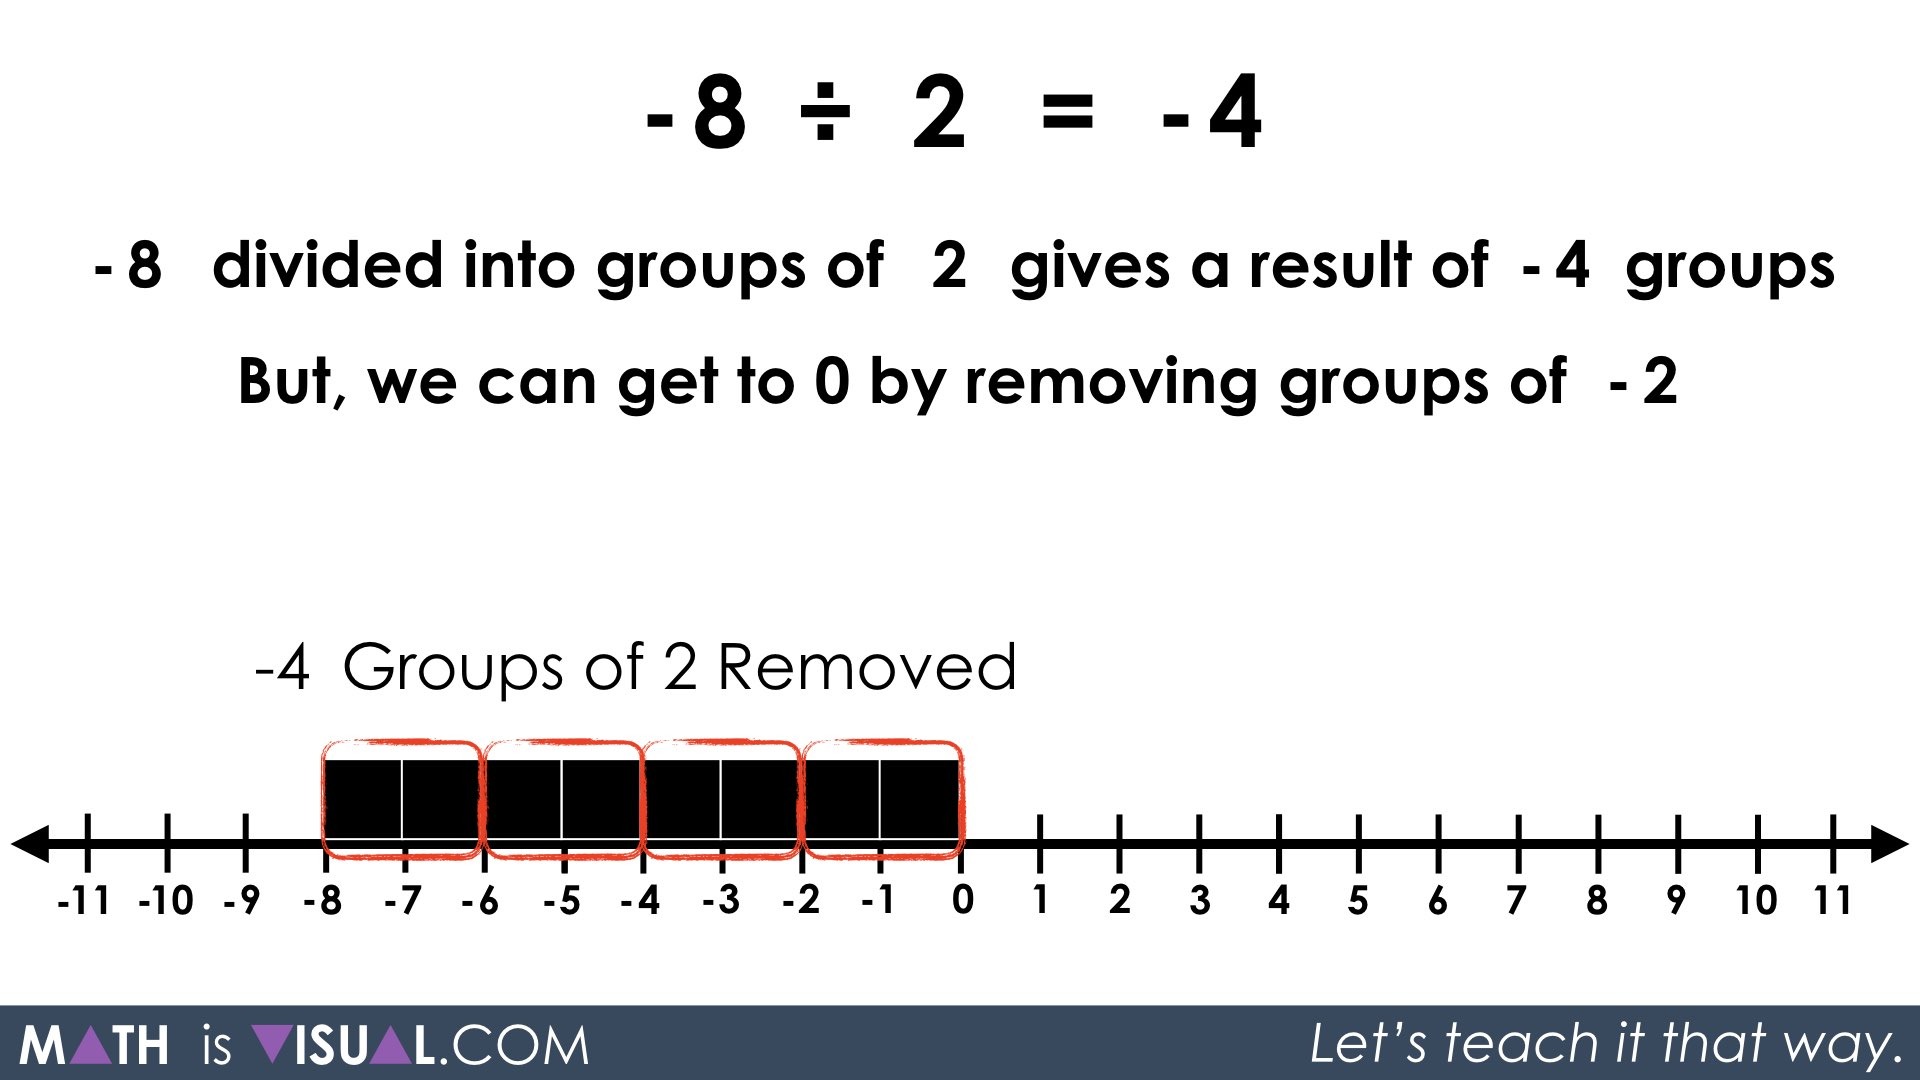 visualizing-integer-division-negative-number-divided-by-positive-number